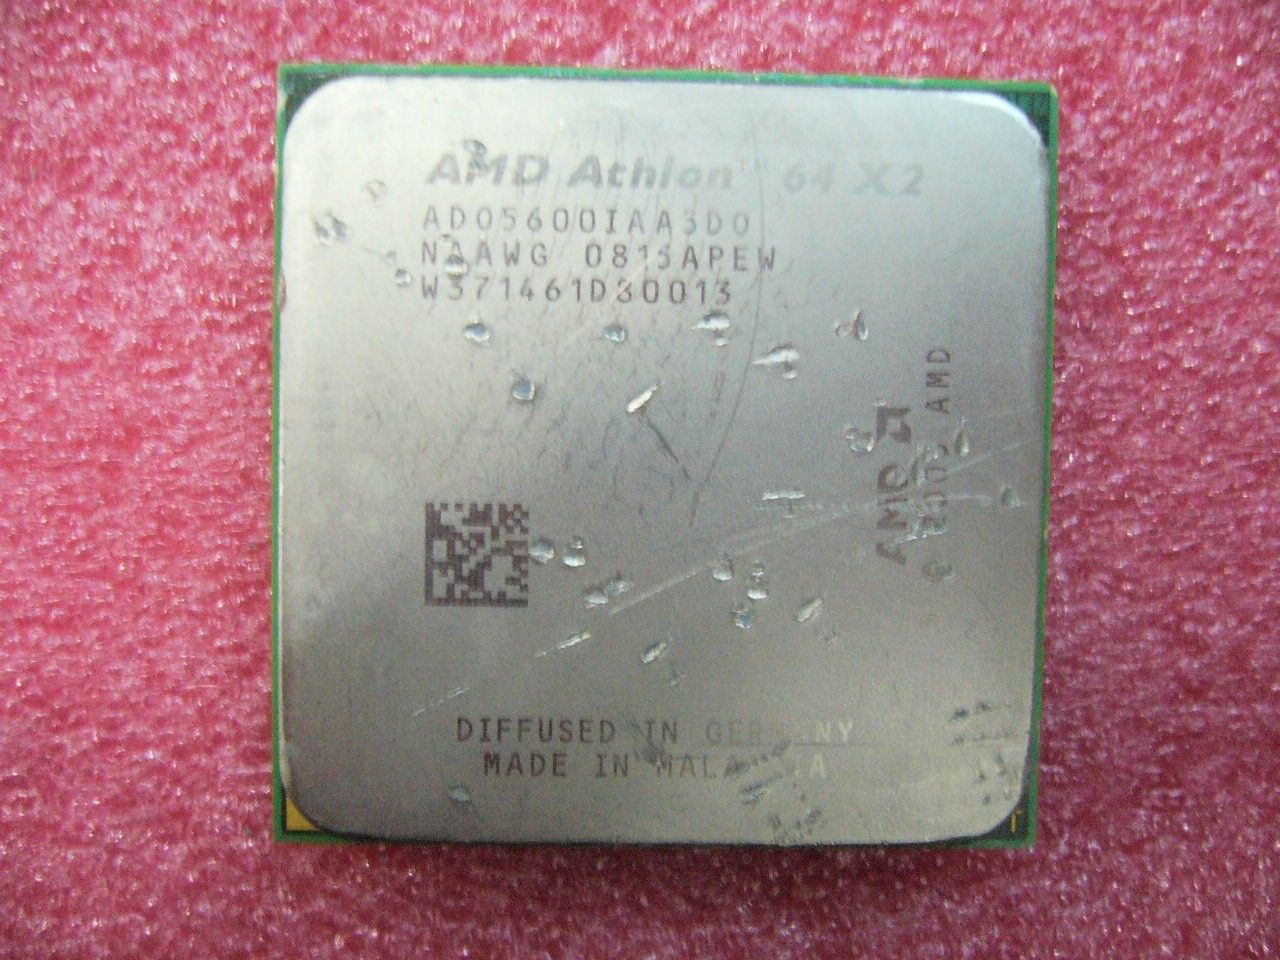 QTY 1x AMD Athlon 64 X2 5600+ 2.9 GHz Dual-Core (ADO5600IAA5DO) CPU Socket AM2